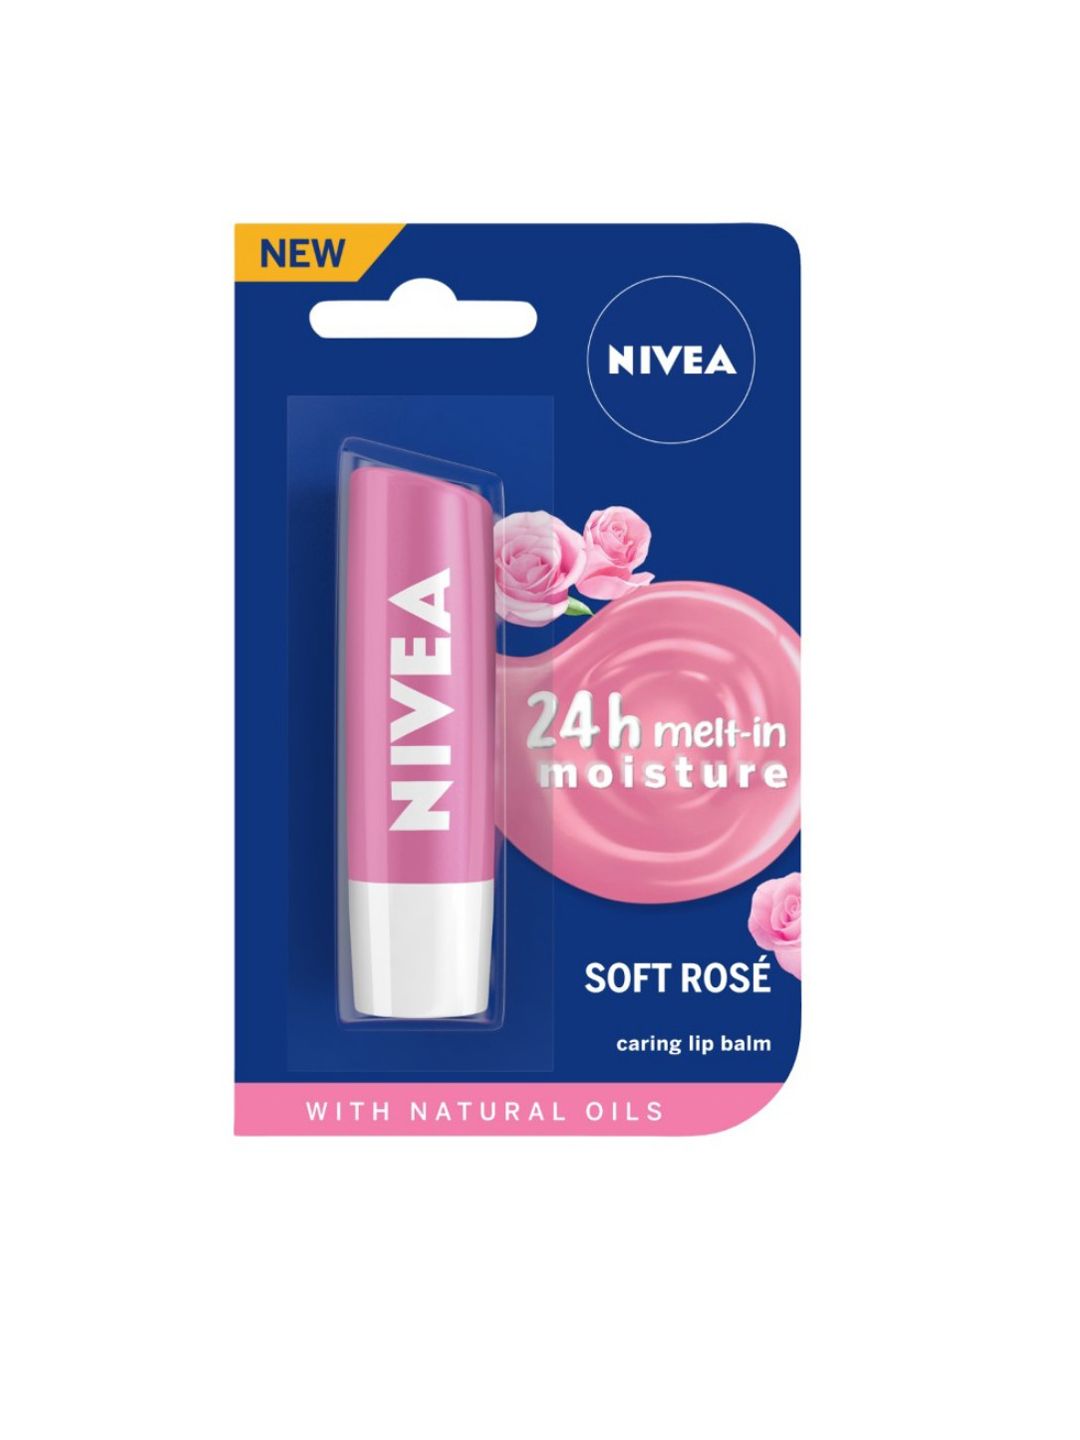 Nivea Soft Rose Caring Lip Balm Price in India